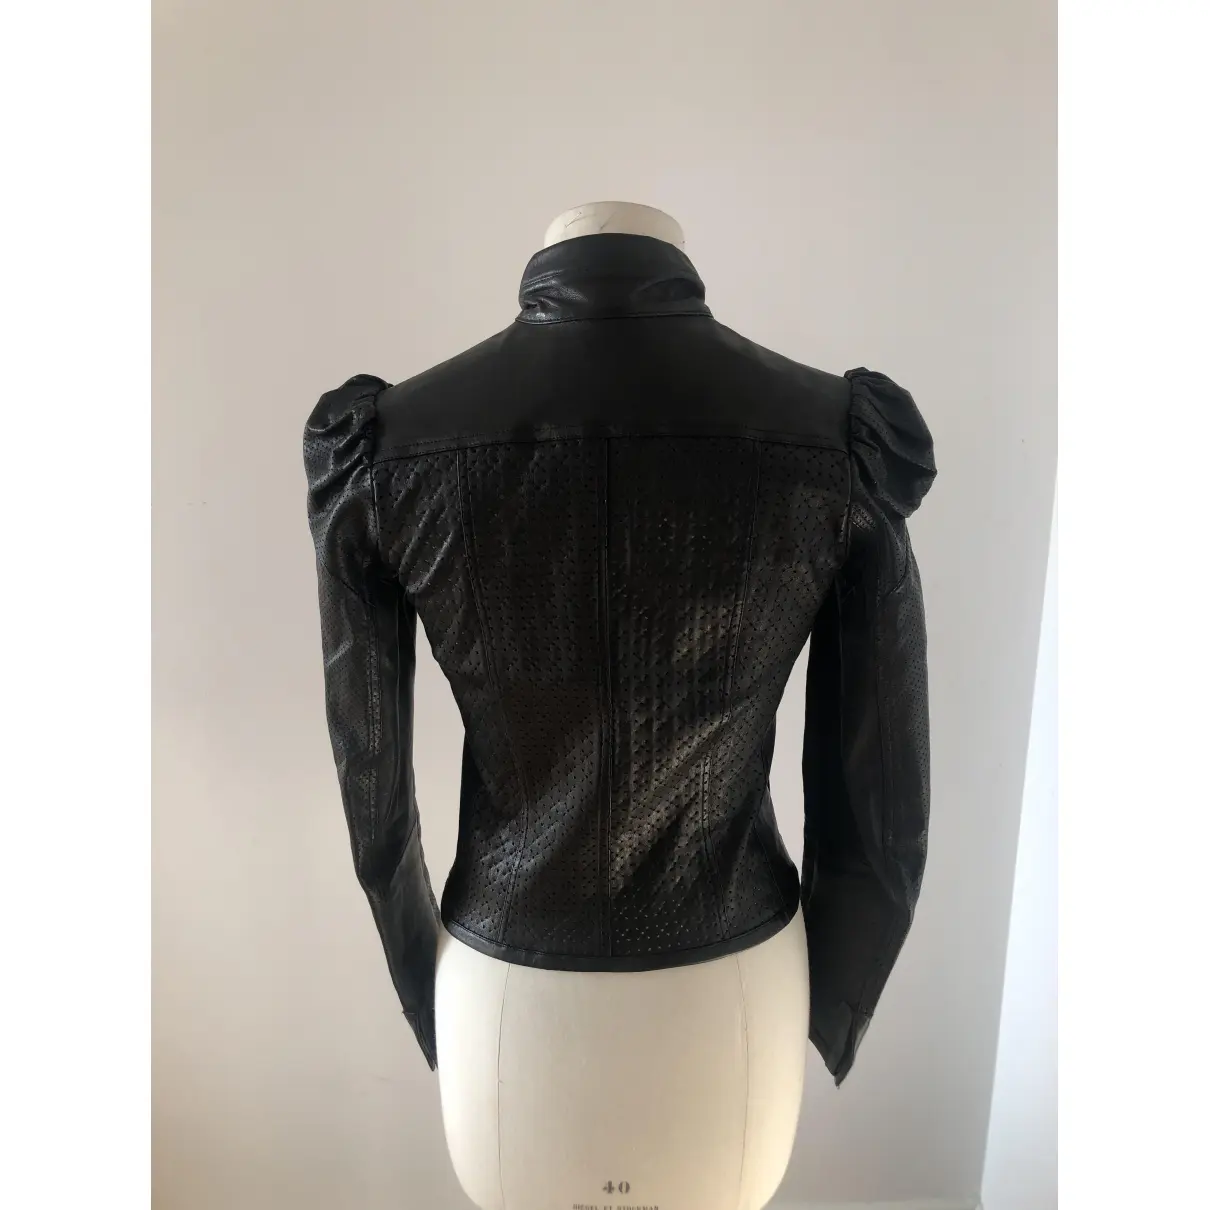 Buy Plein Sud Leather biker jacket online - Vintage